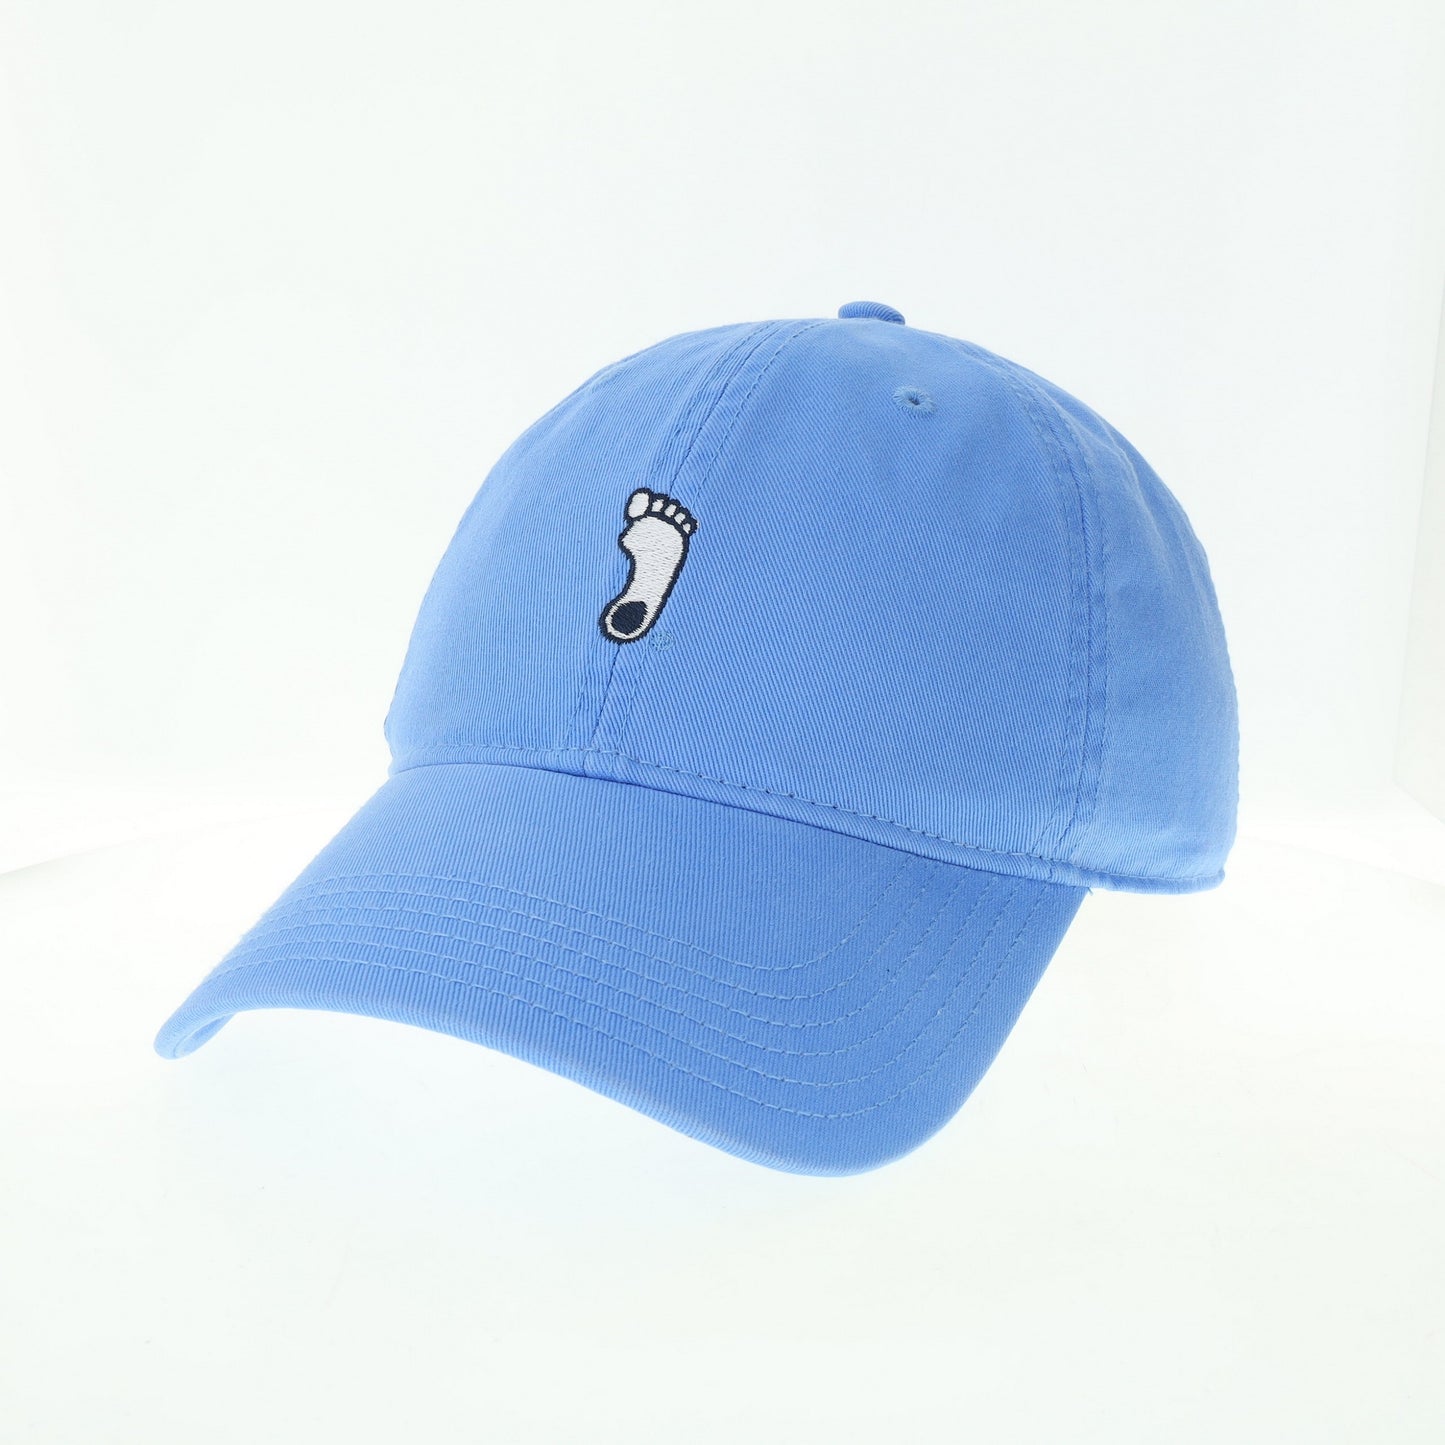 UNC Tar Heel Foot Hat in Carolina Blue by Legacy